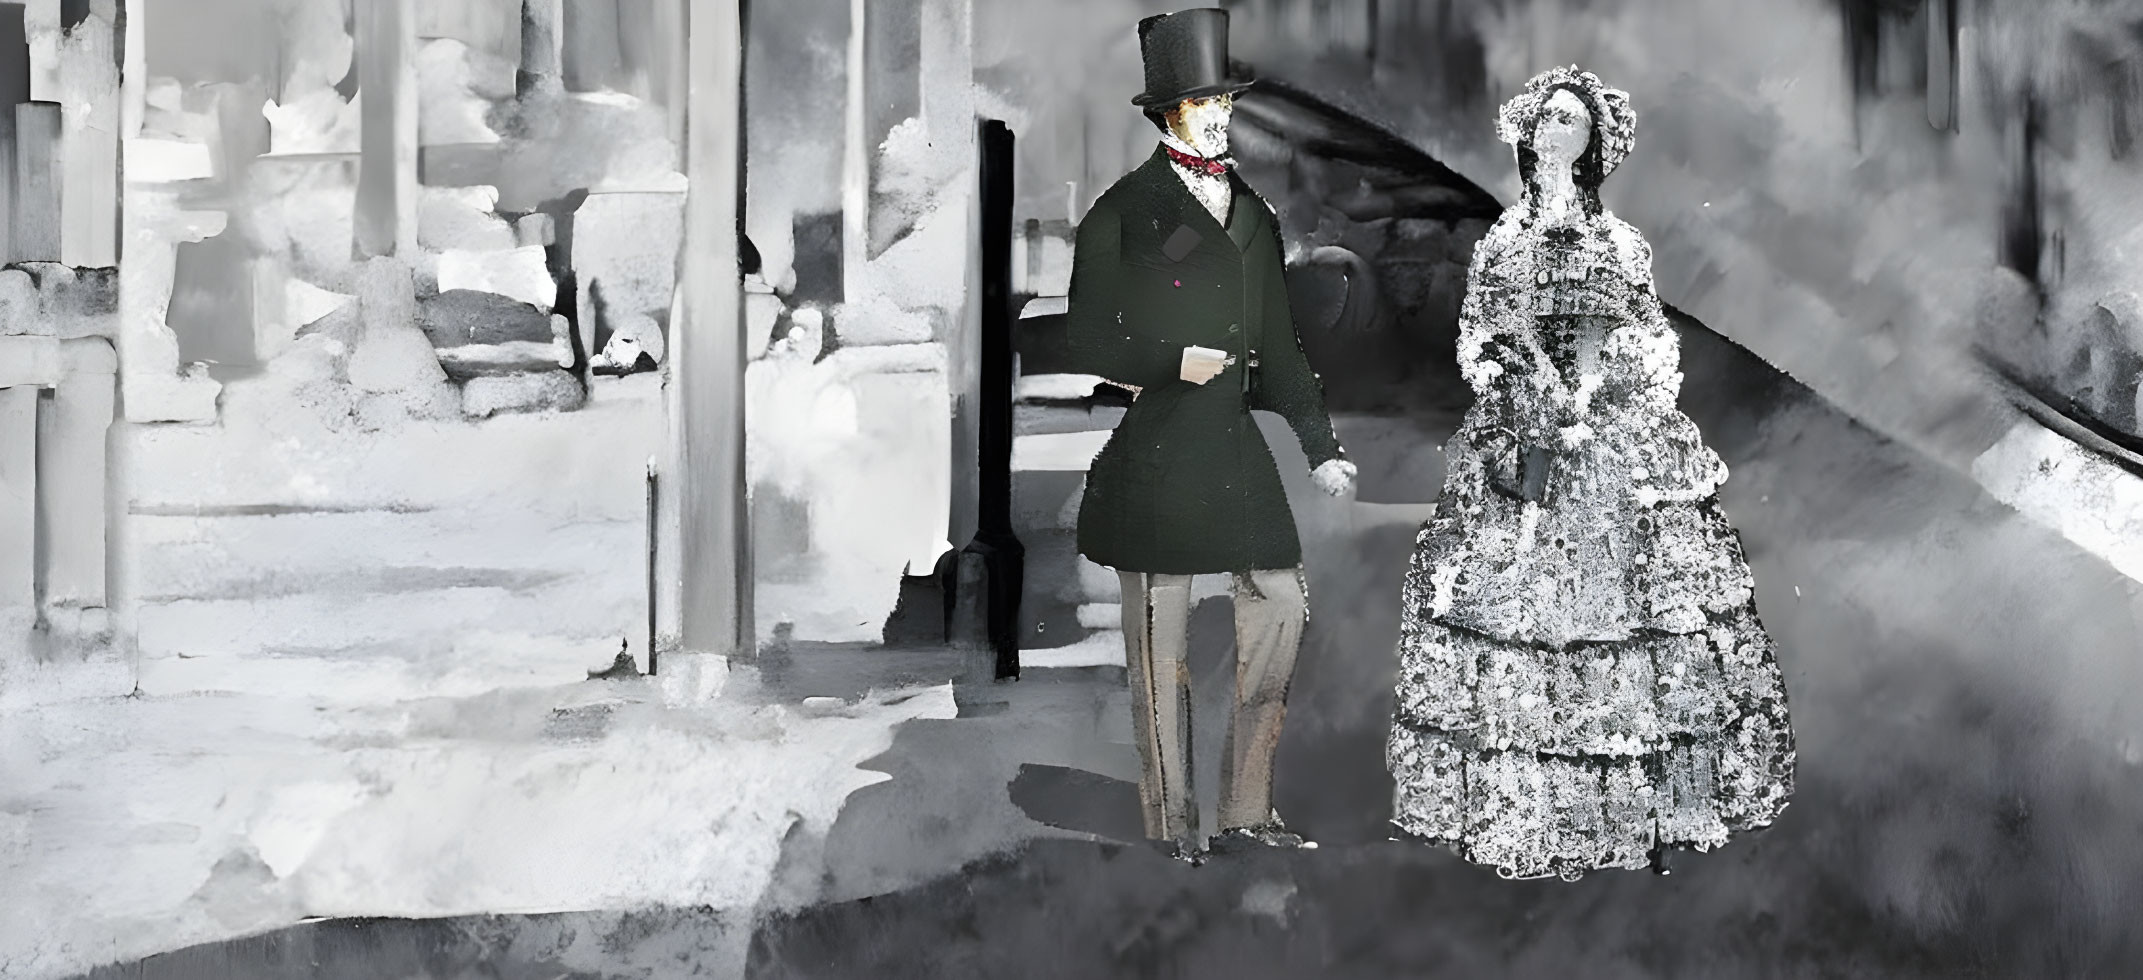 Stylized figures in vintage attire on monochrome backdrop